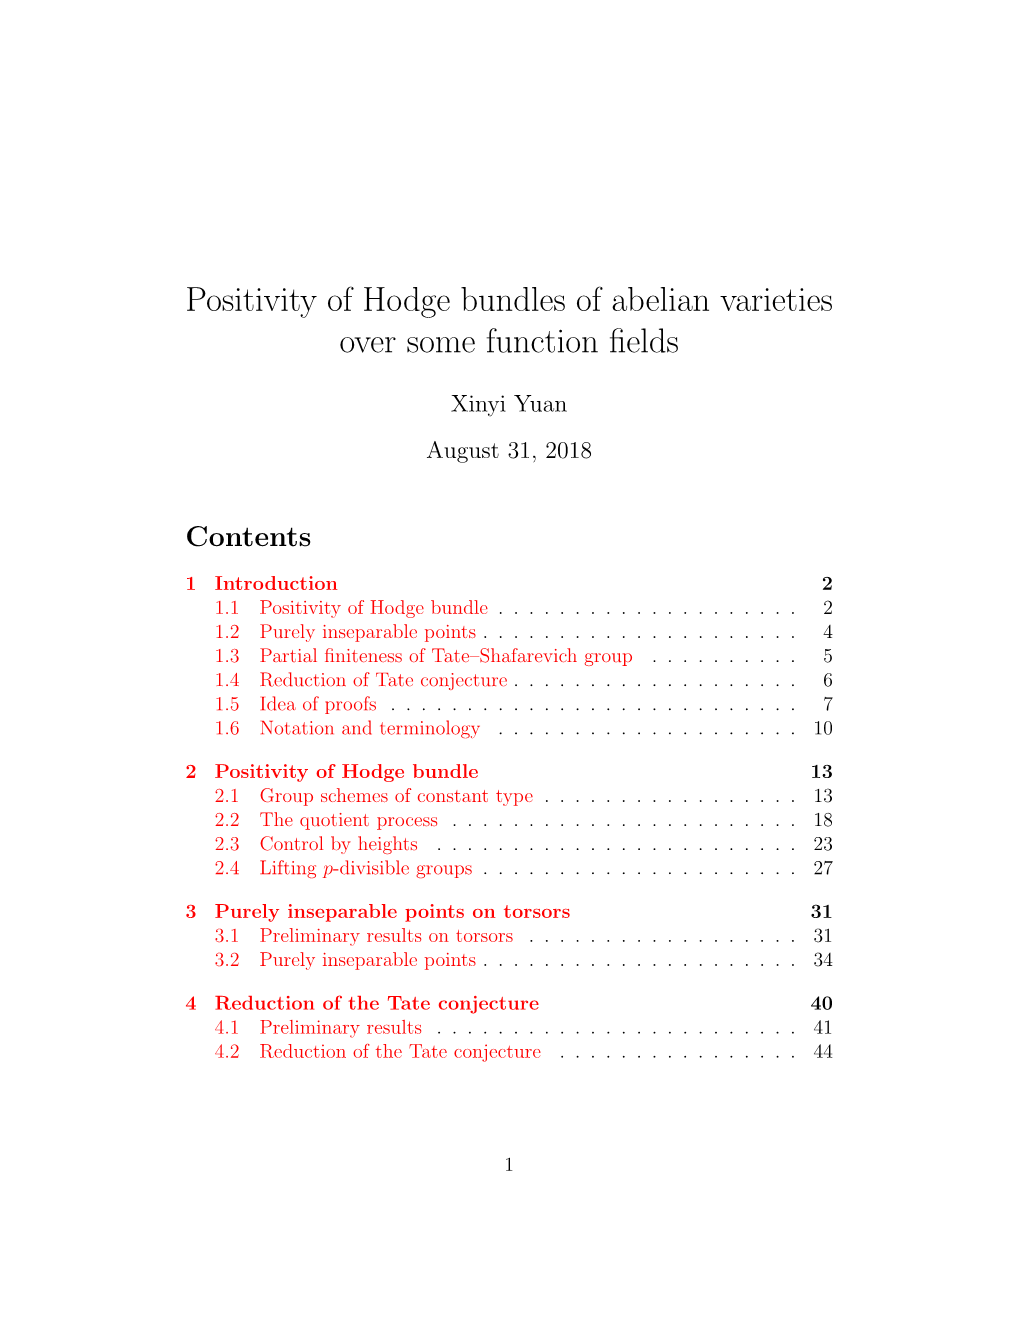 Positivity of Hodge Bundles of Abelian Varieties Over Some Function Fields